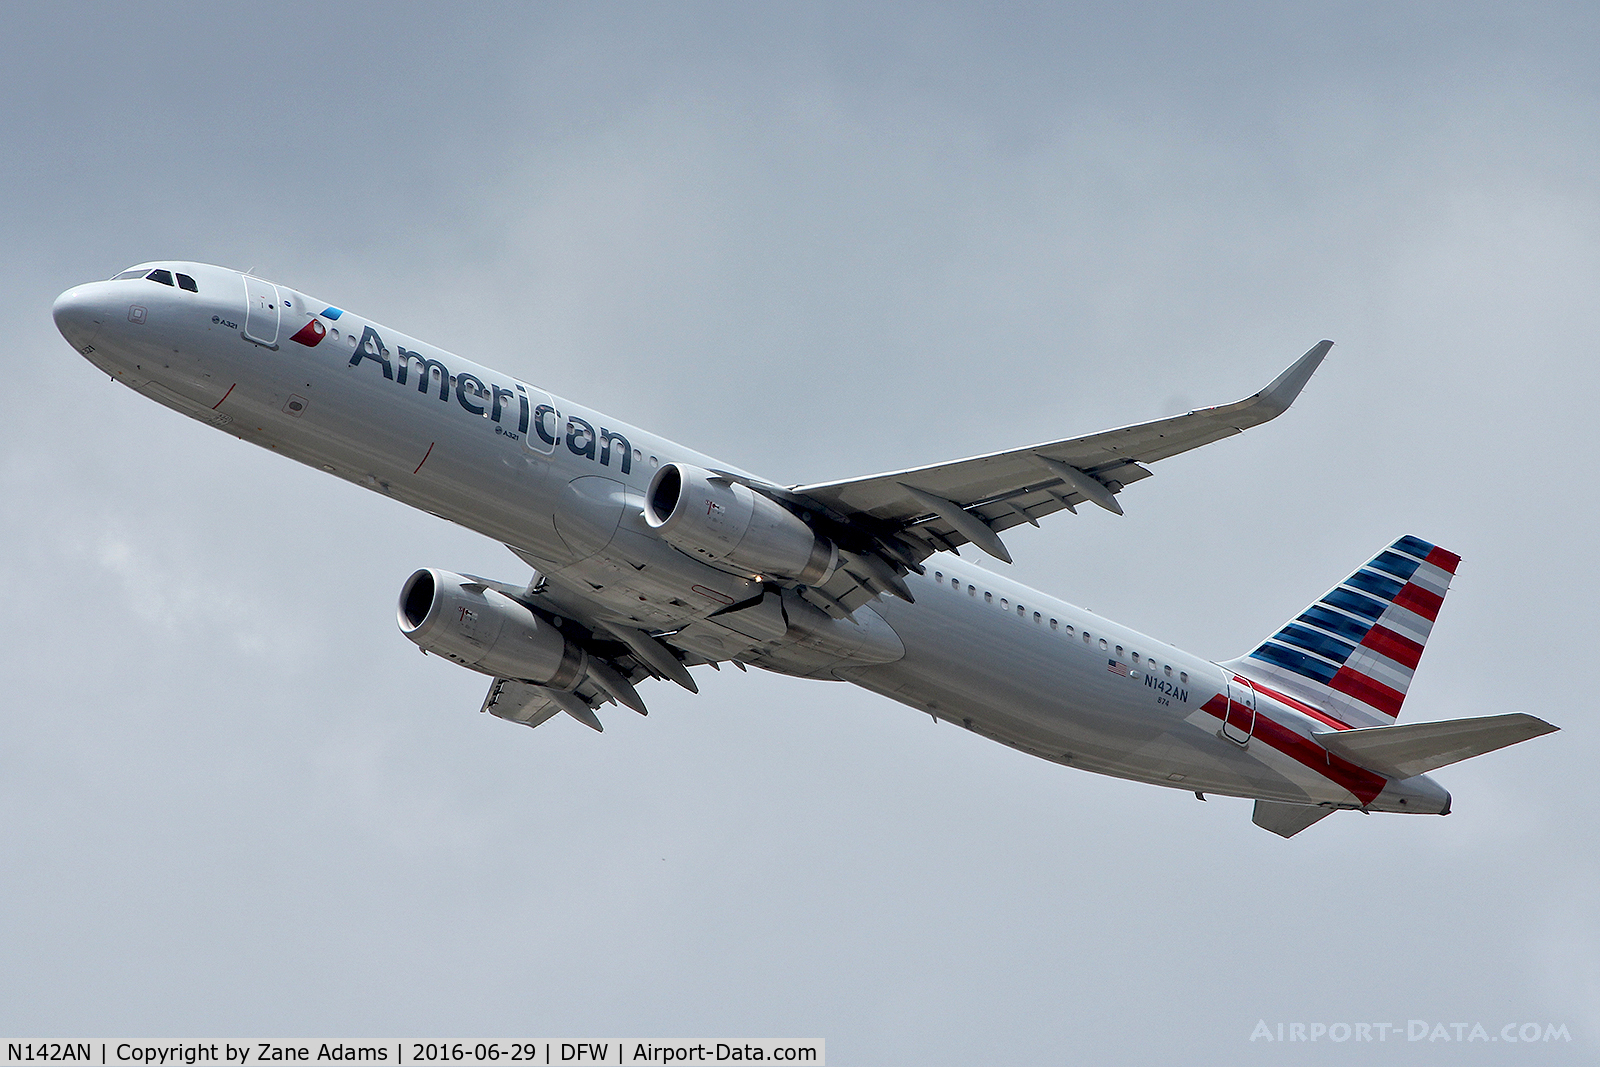 N142AN, 2015 Airbus A321-231 C/N 6711, Departing DFW Airport